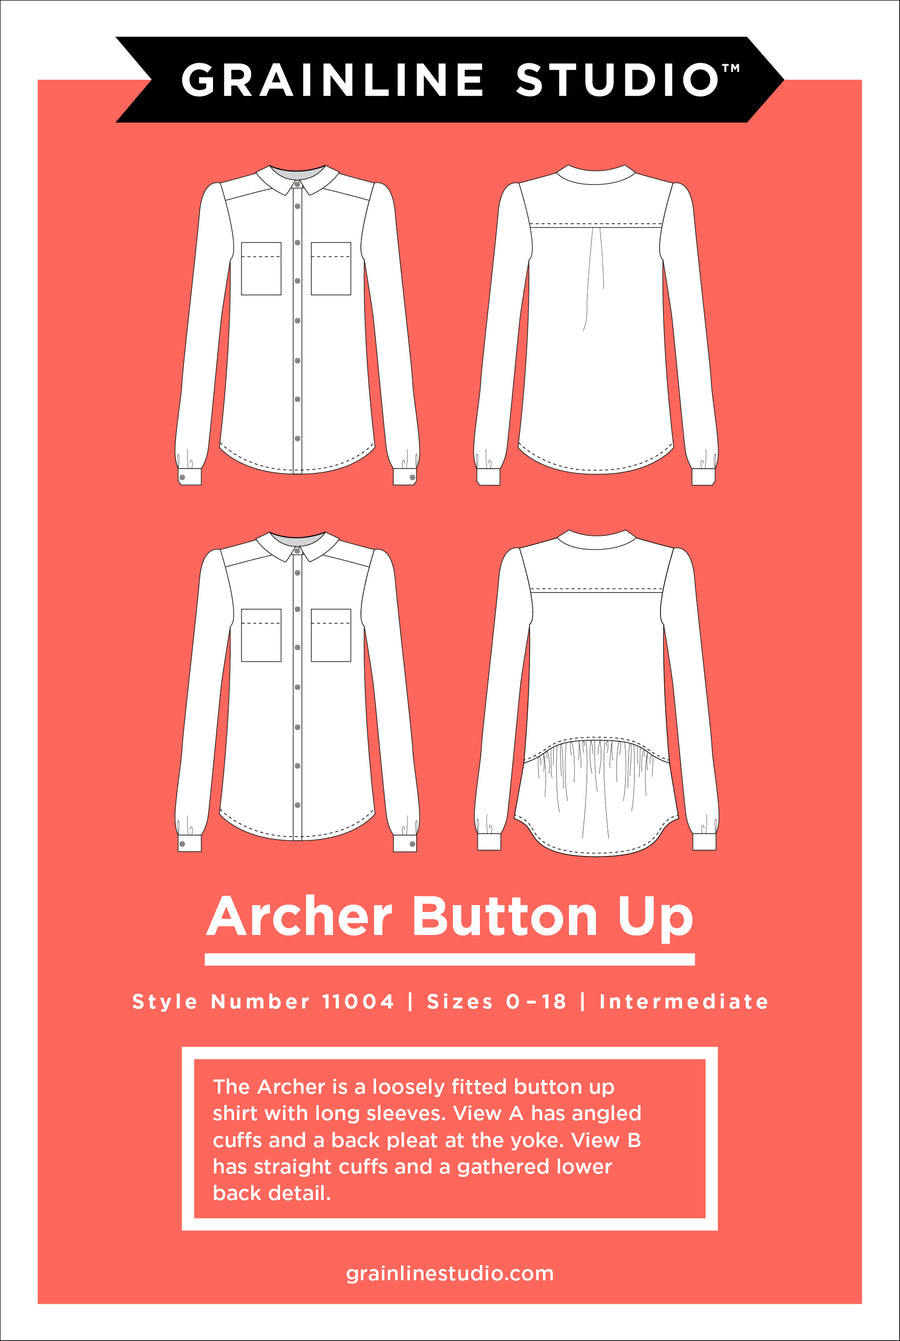 Grainline Studio - Archer Button Up - 0-18